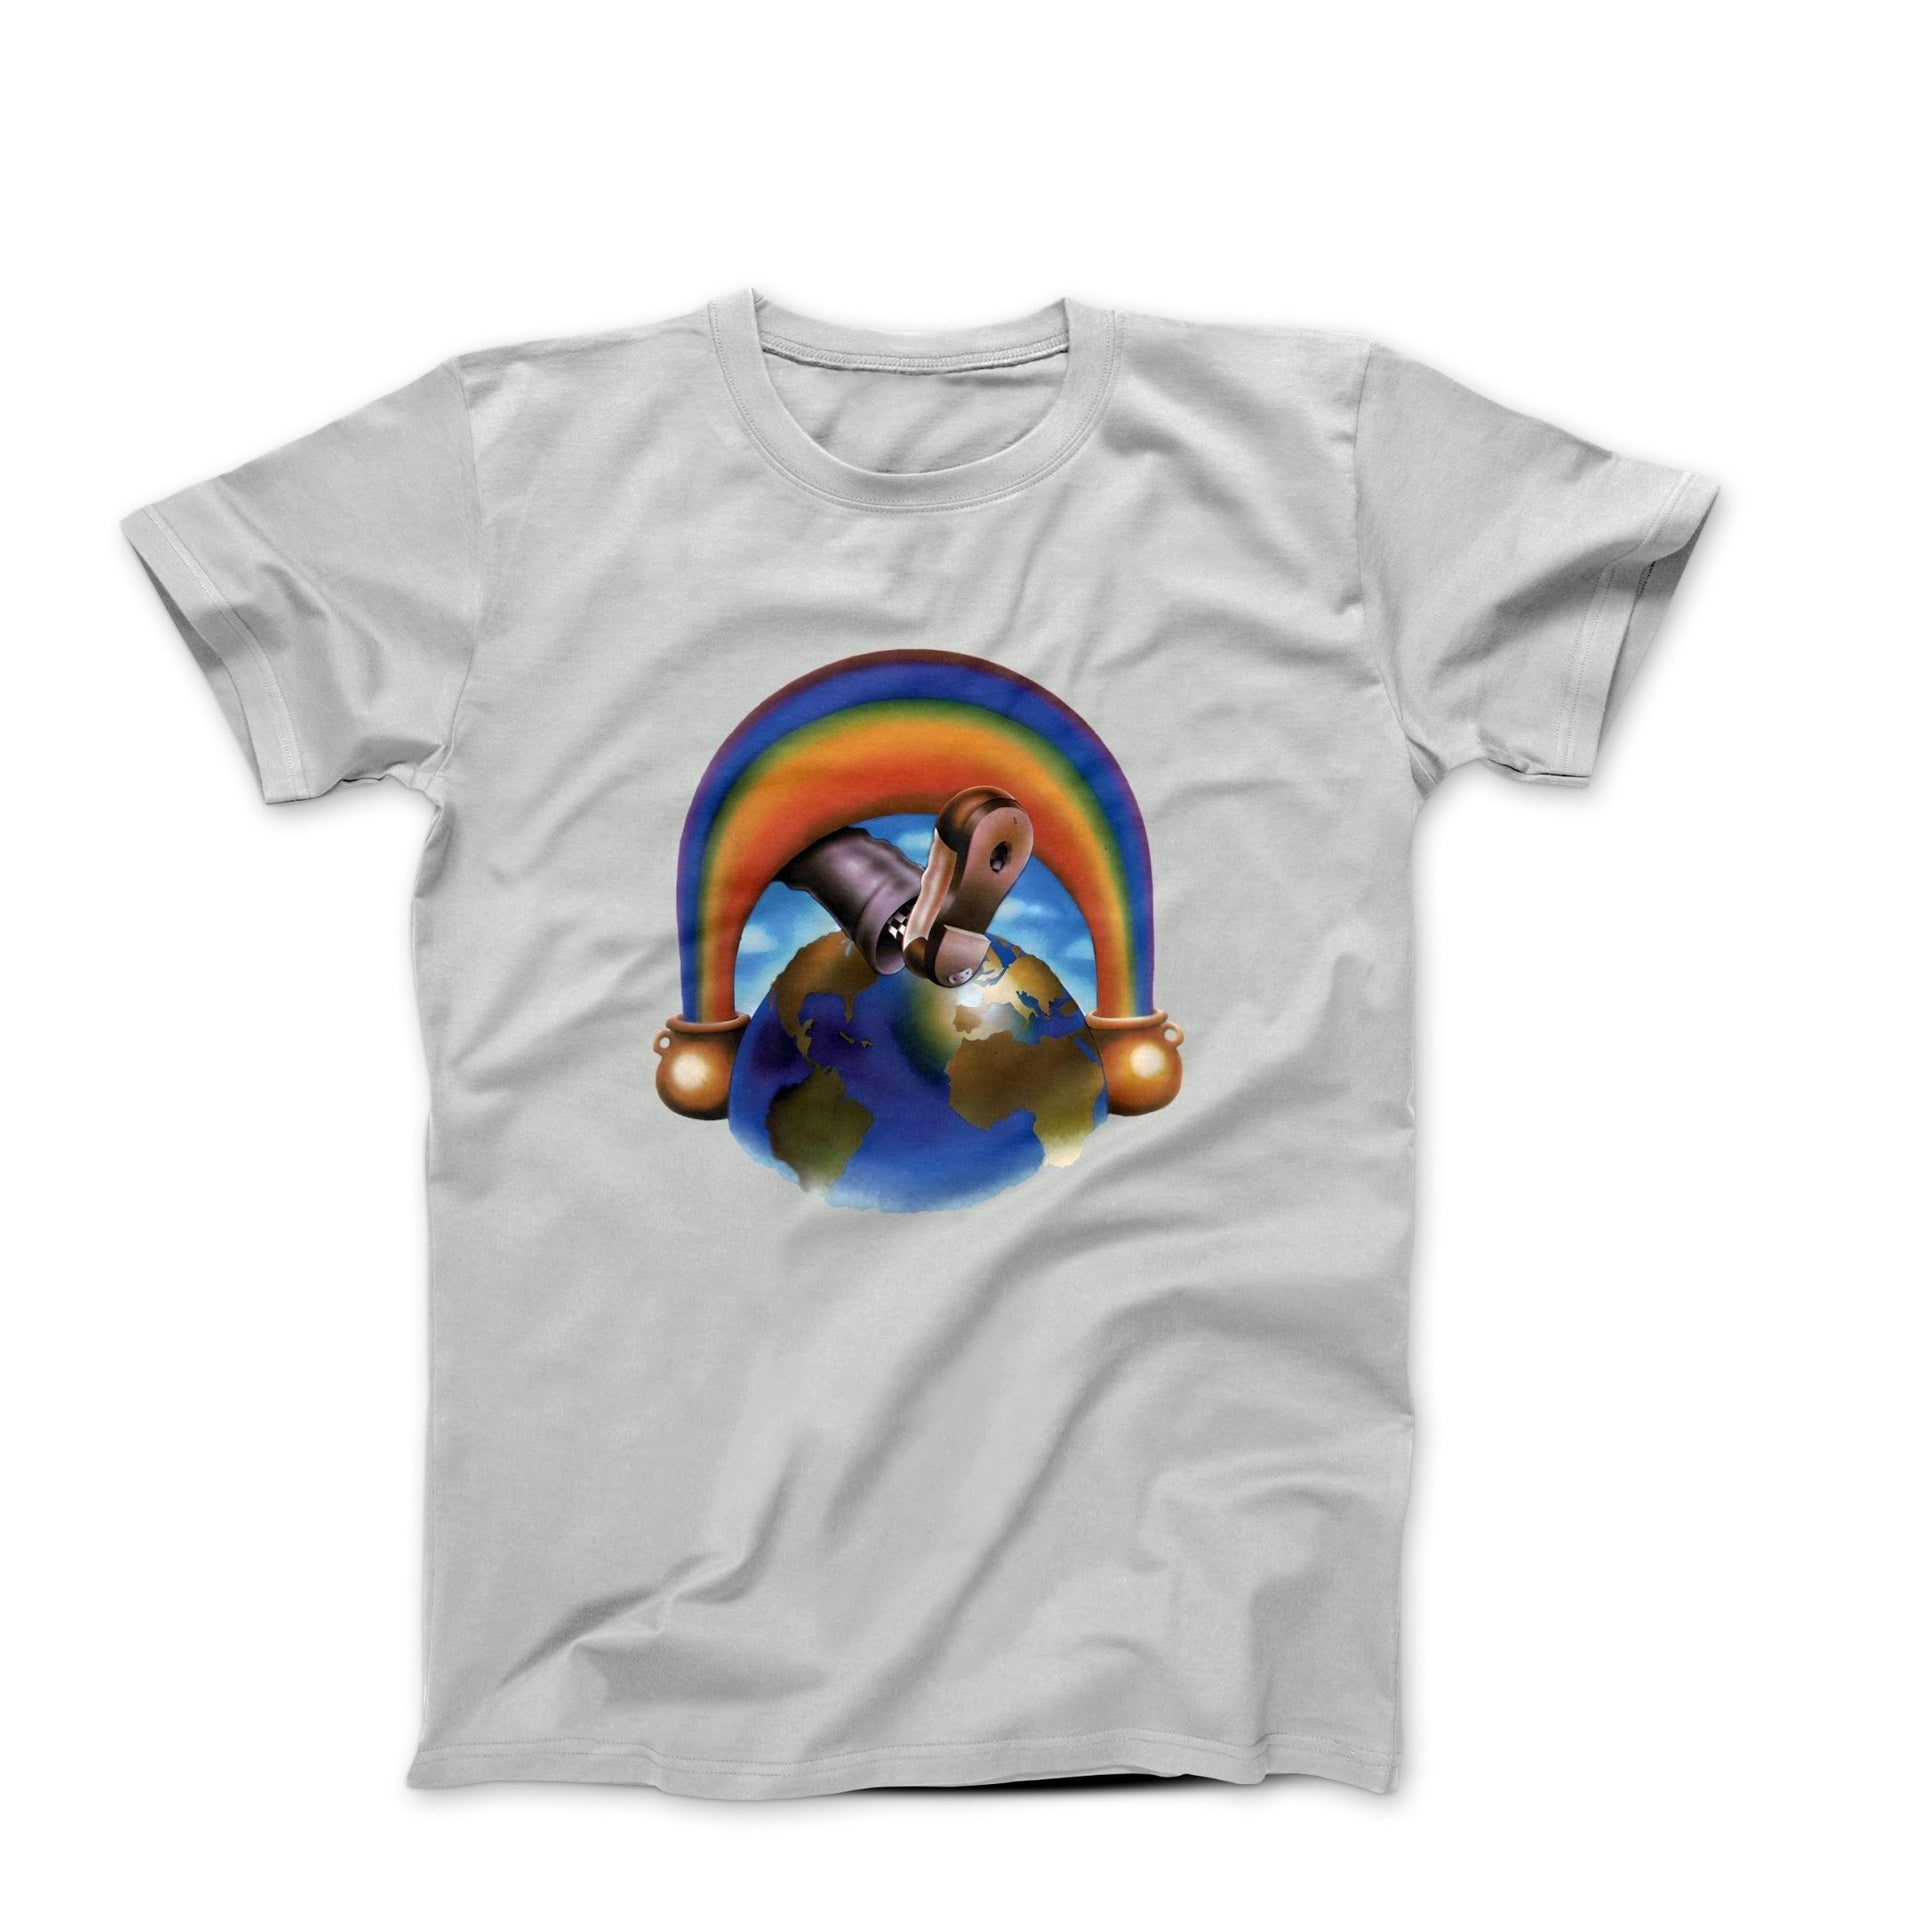 Grateful Dead Truckin' Foot (1972) Album Cover T-shirt - Clothing - Harvey Ltd